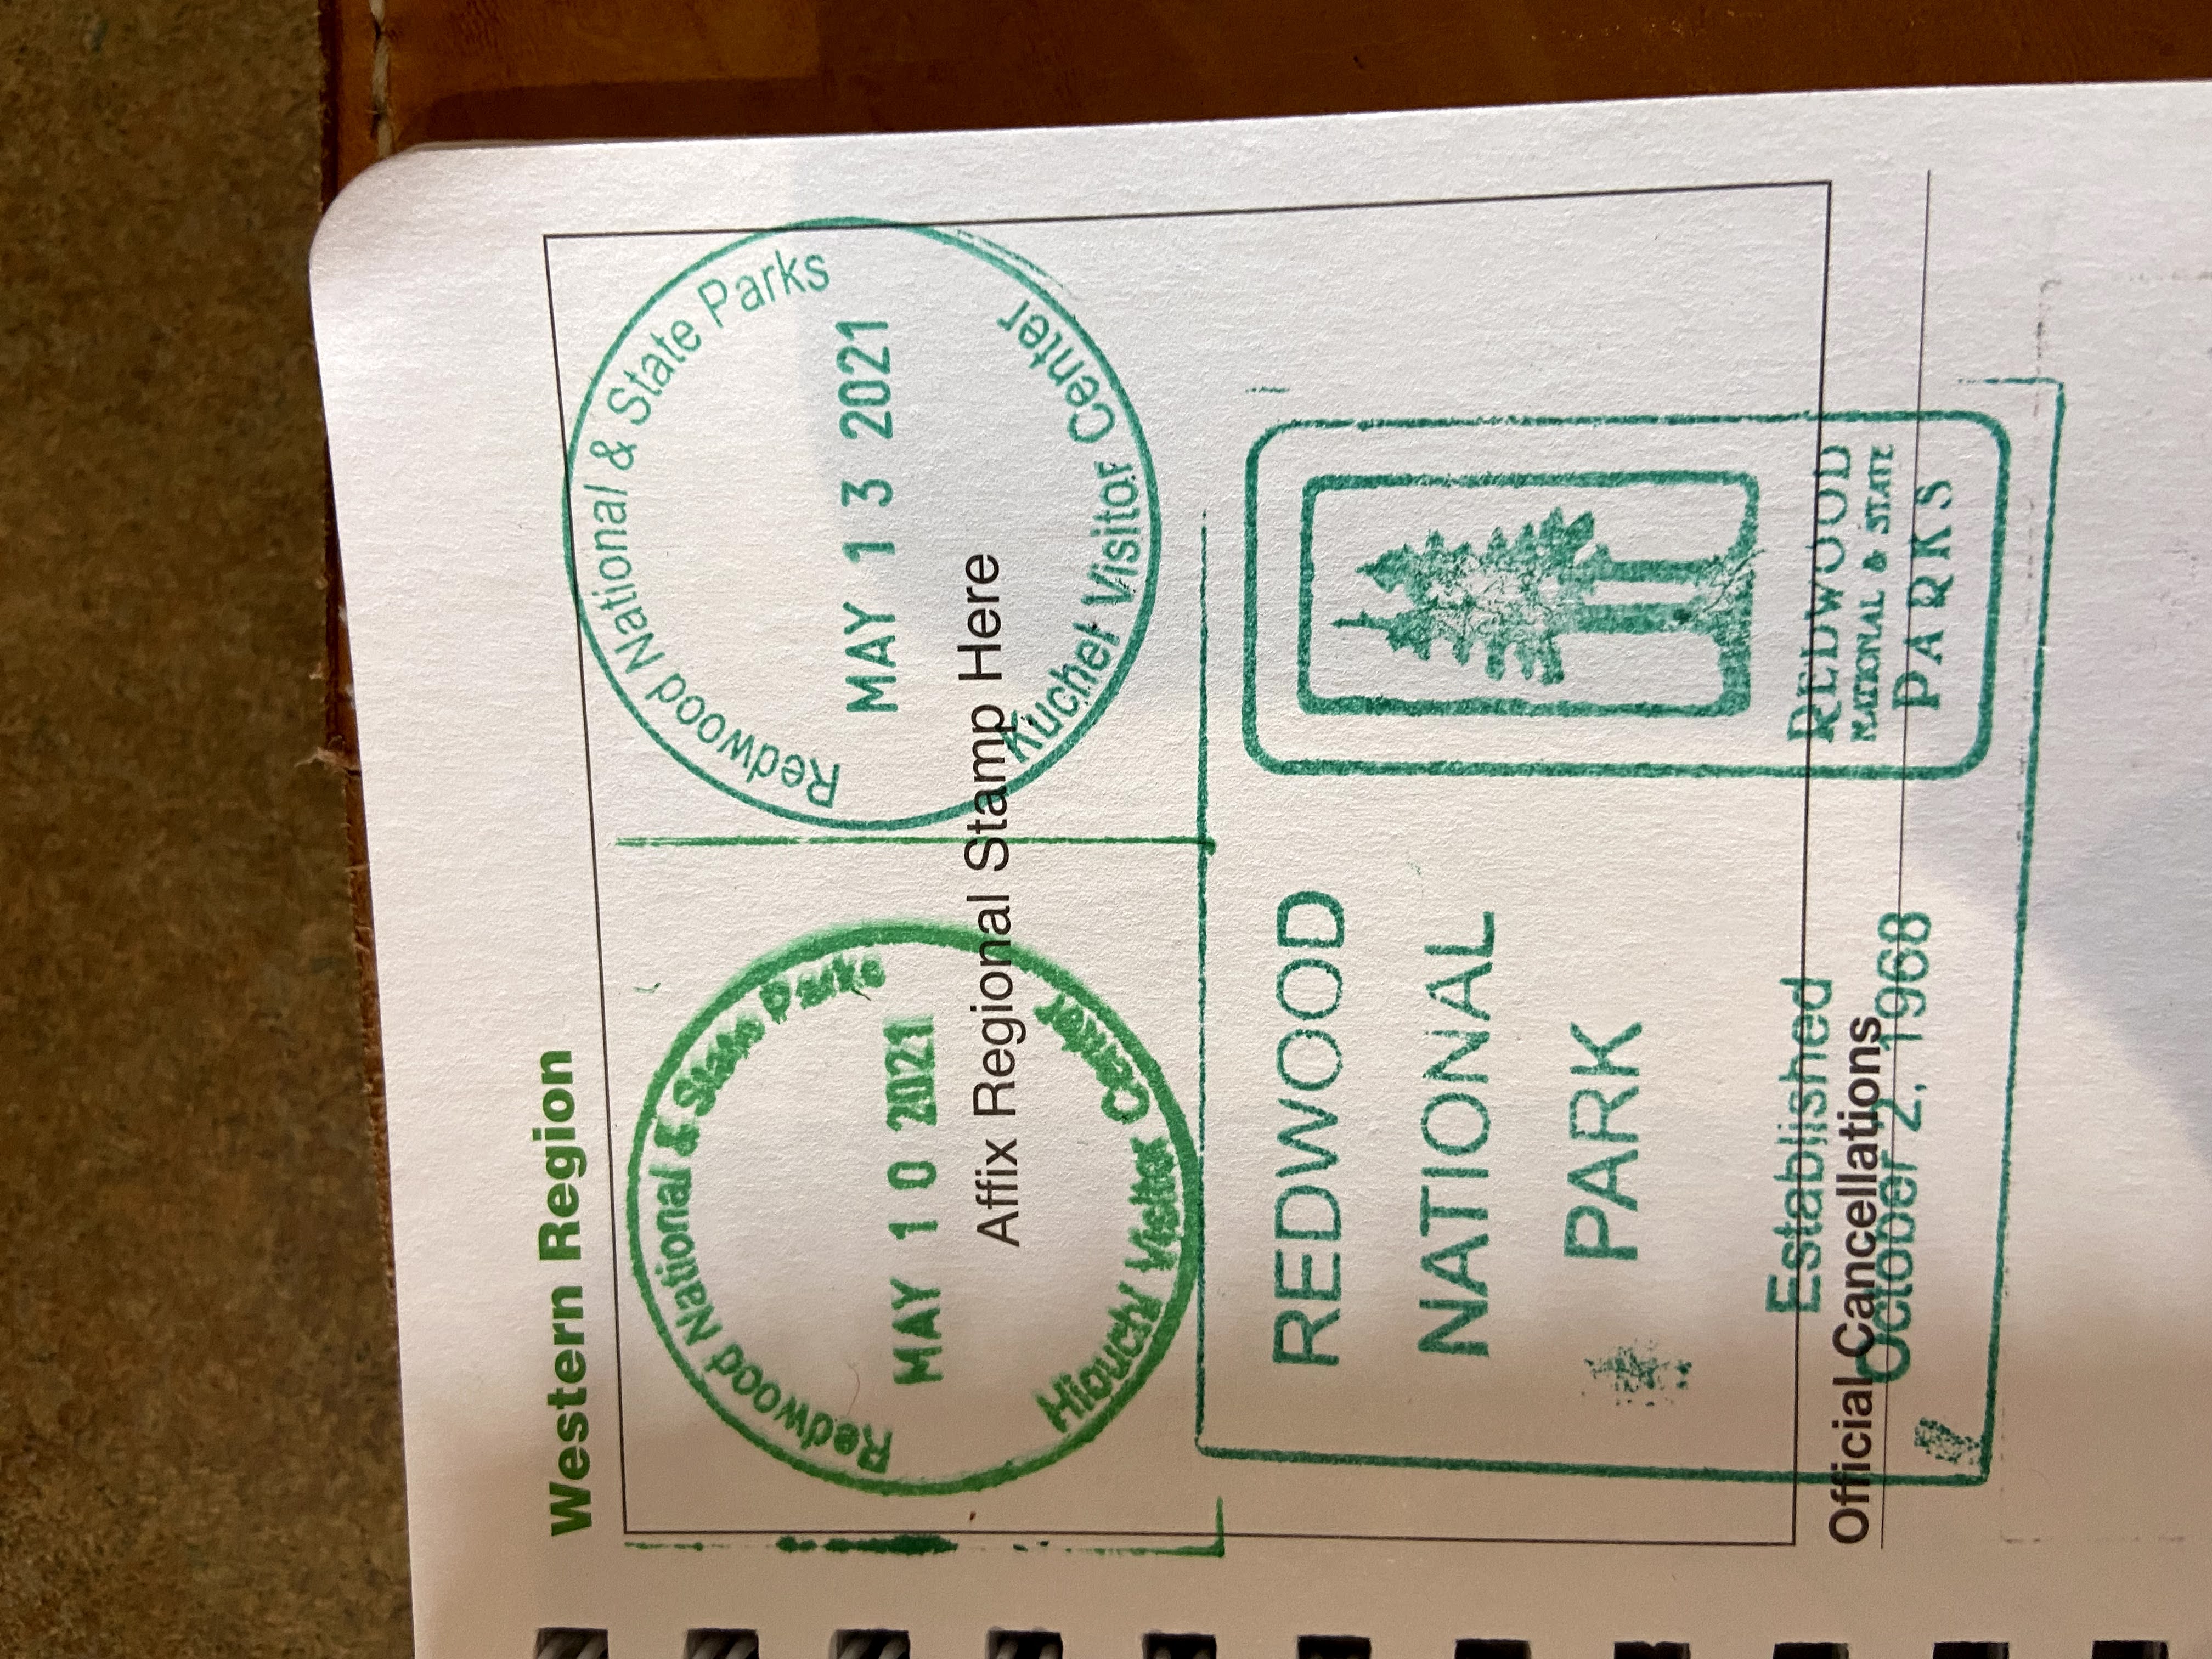 redwoods national park stamp in parks passport